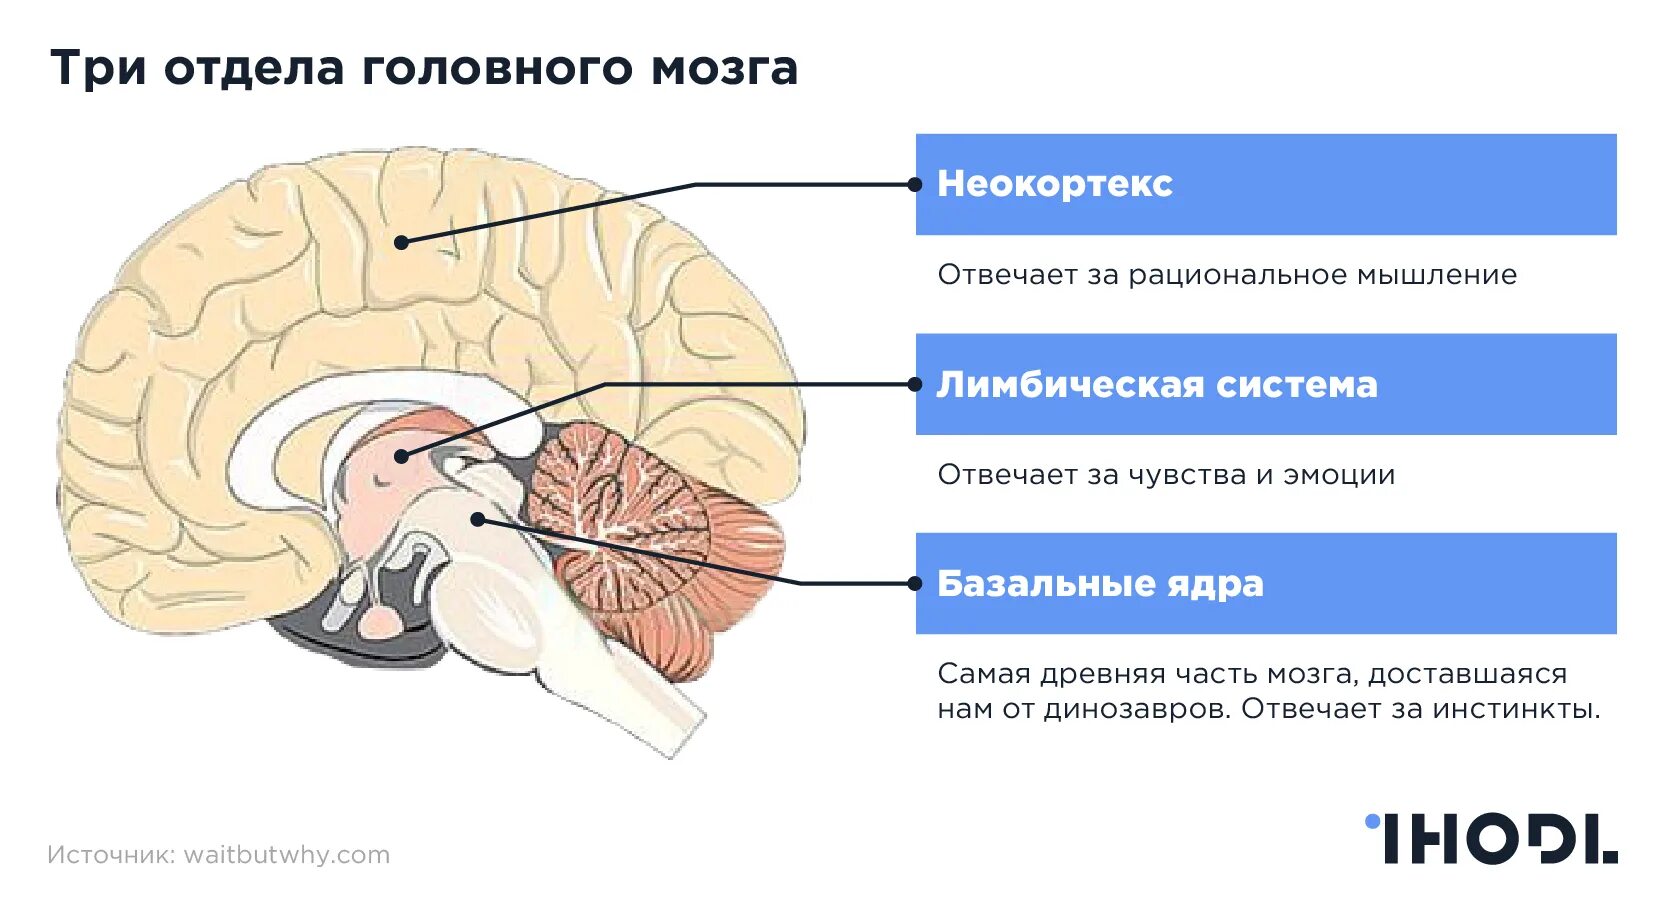 3 слоя мозга. Отделы головного мозга неокортекс. Подкорковые отделы головного мозга. Базальные отделы головного мозга. Подкорковые структуры мозга.